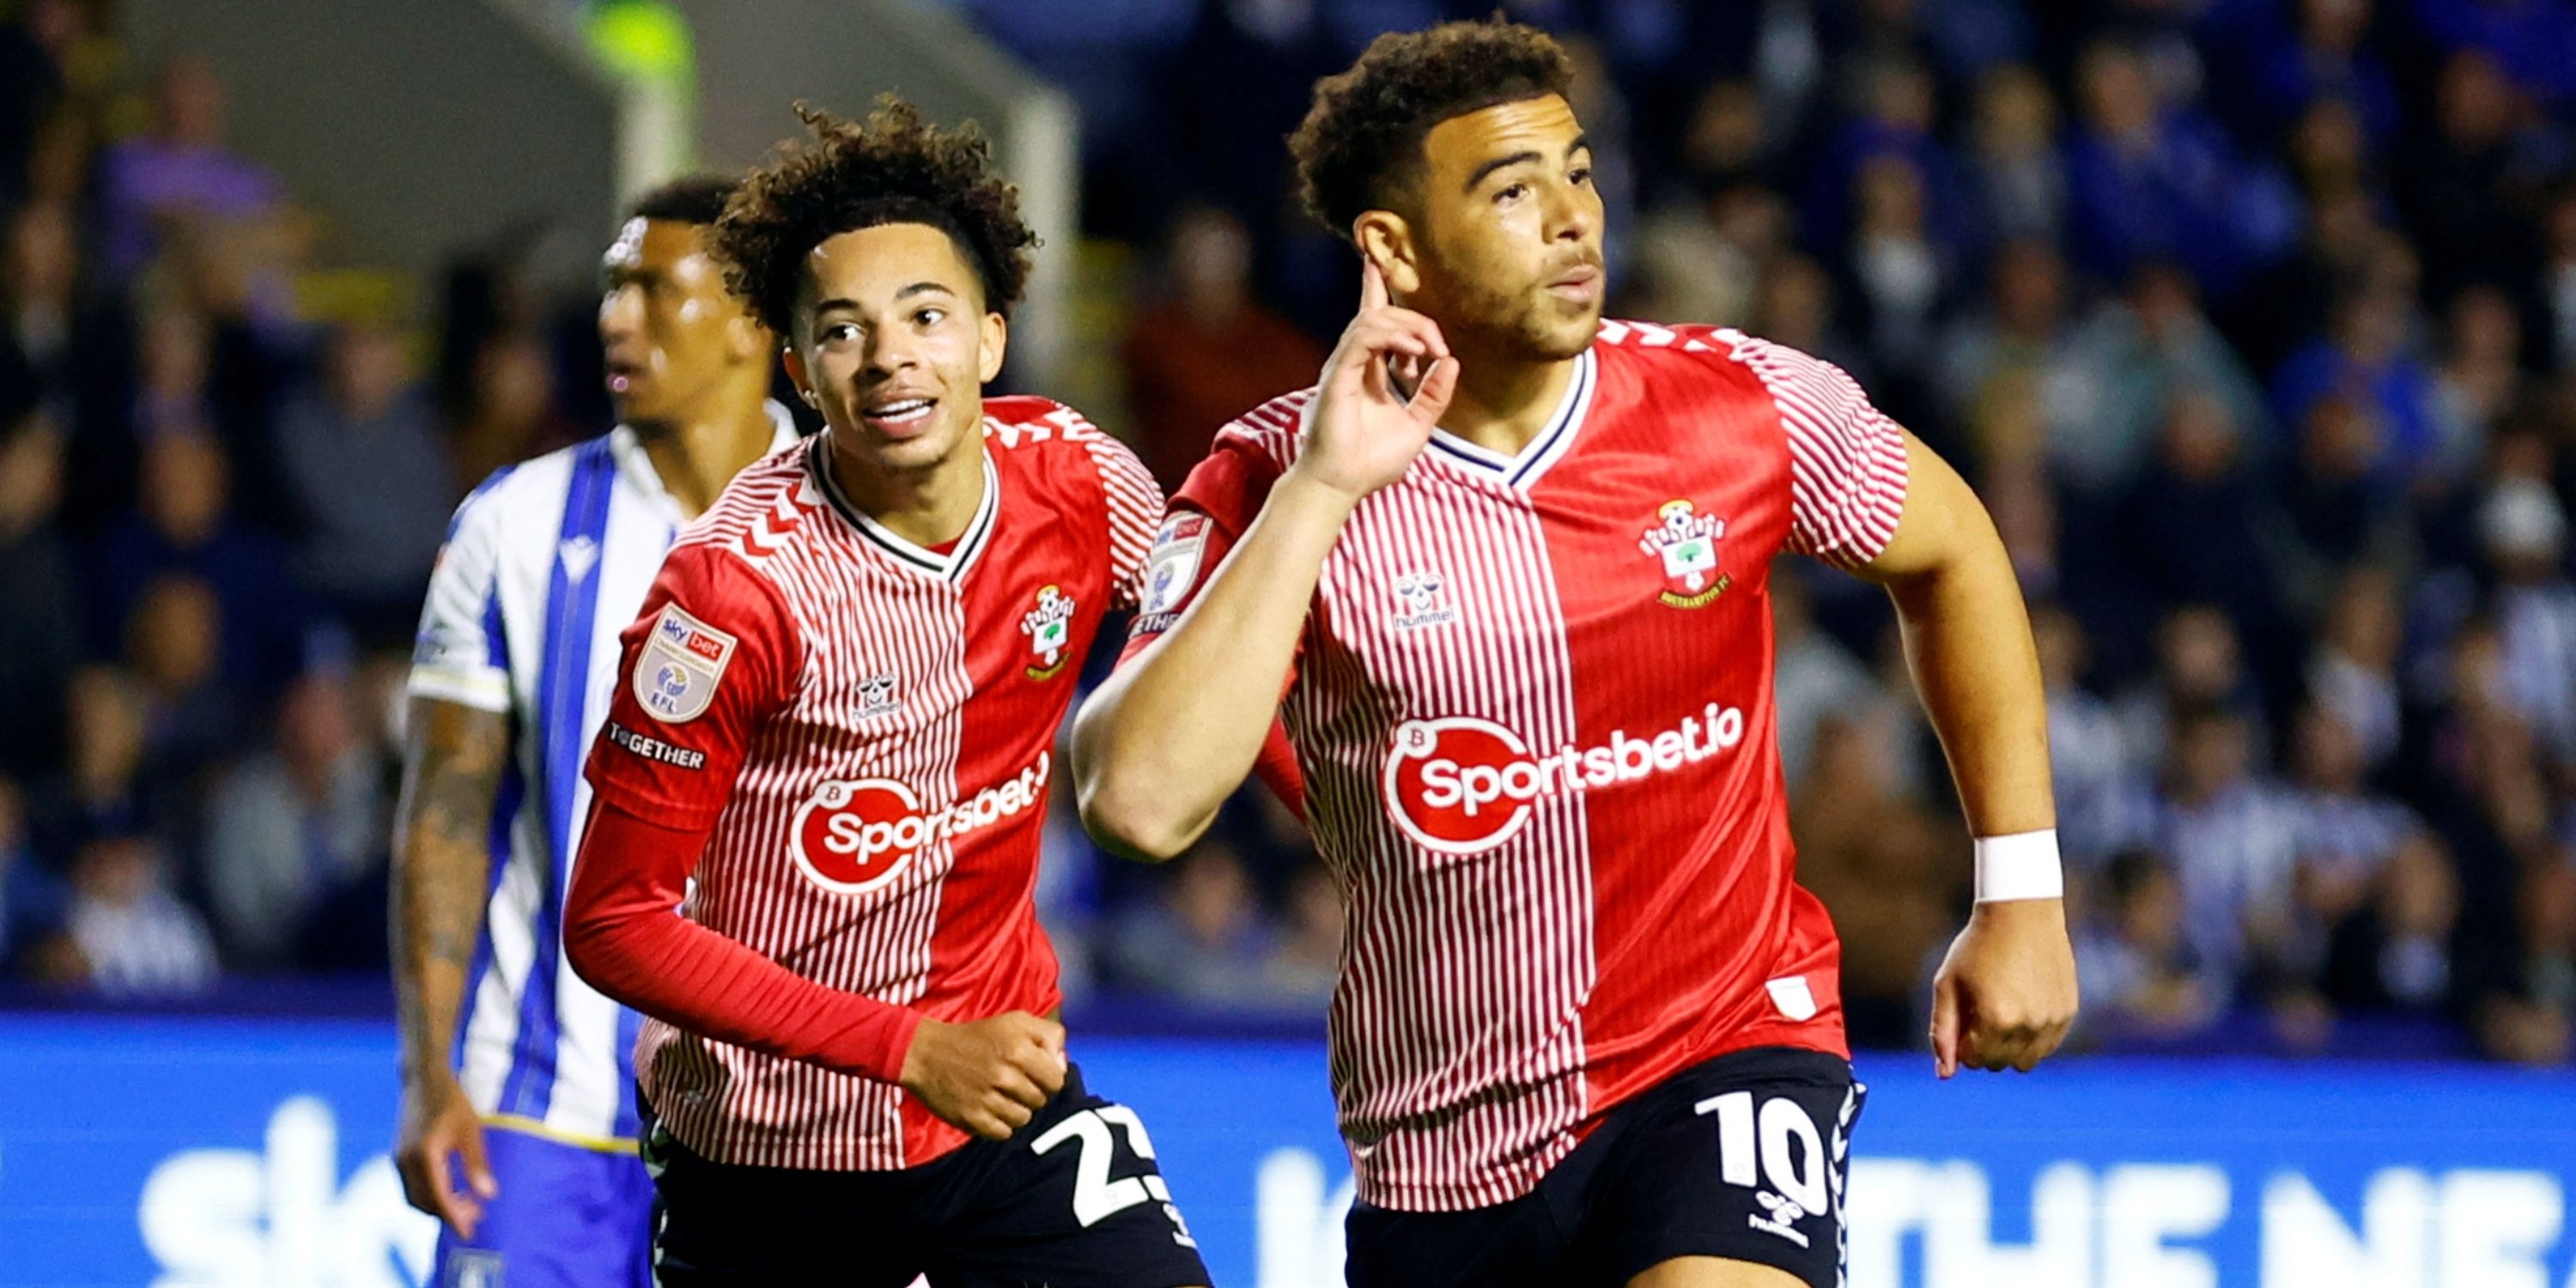 Southampton’s Che Adams celebrates scoring their second goal with Samuel Edozie